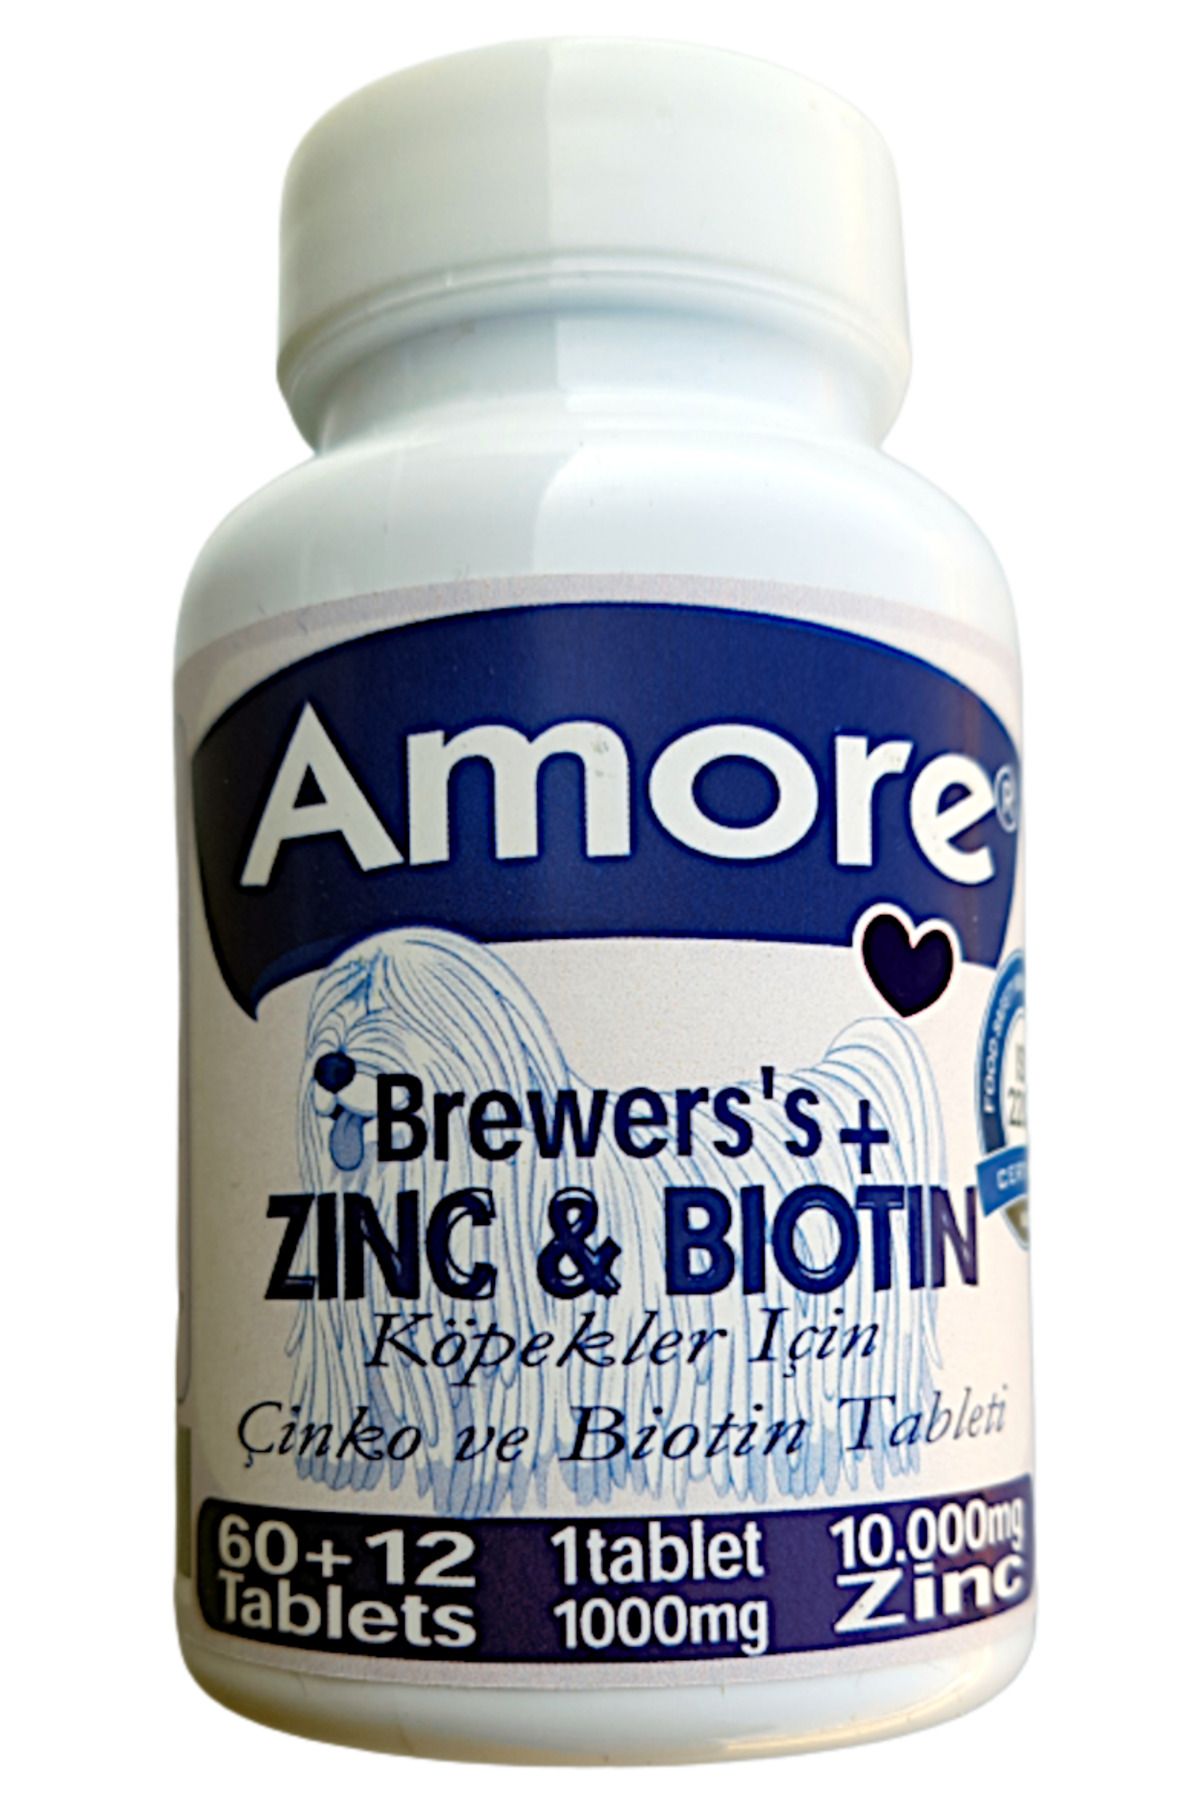 Amore Kopek Brewers 2 x 72li Cinko Biotin Tablet Tuy Dokum XL Zinc Biotin Large Tabs